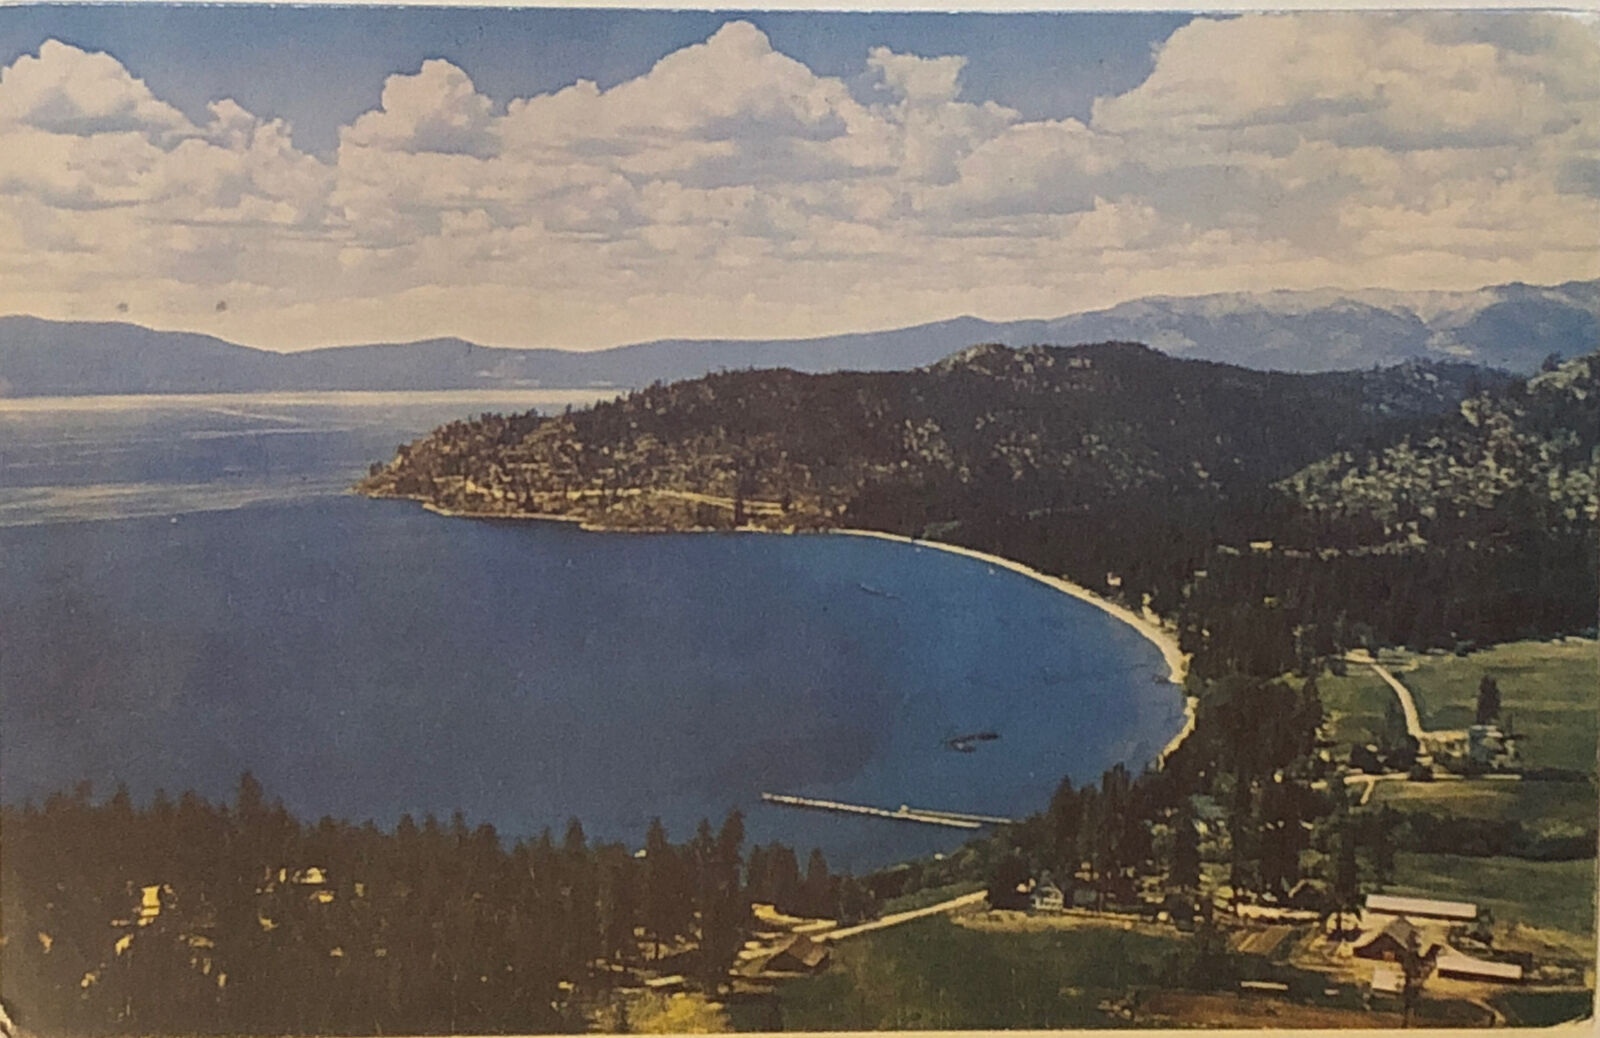 Glenbrook Bay Lake Tahoe Nevada Scenic Aerial View VTG 1950s Chrome POSTCARD NV